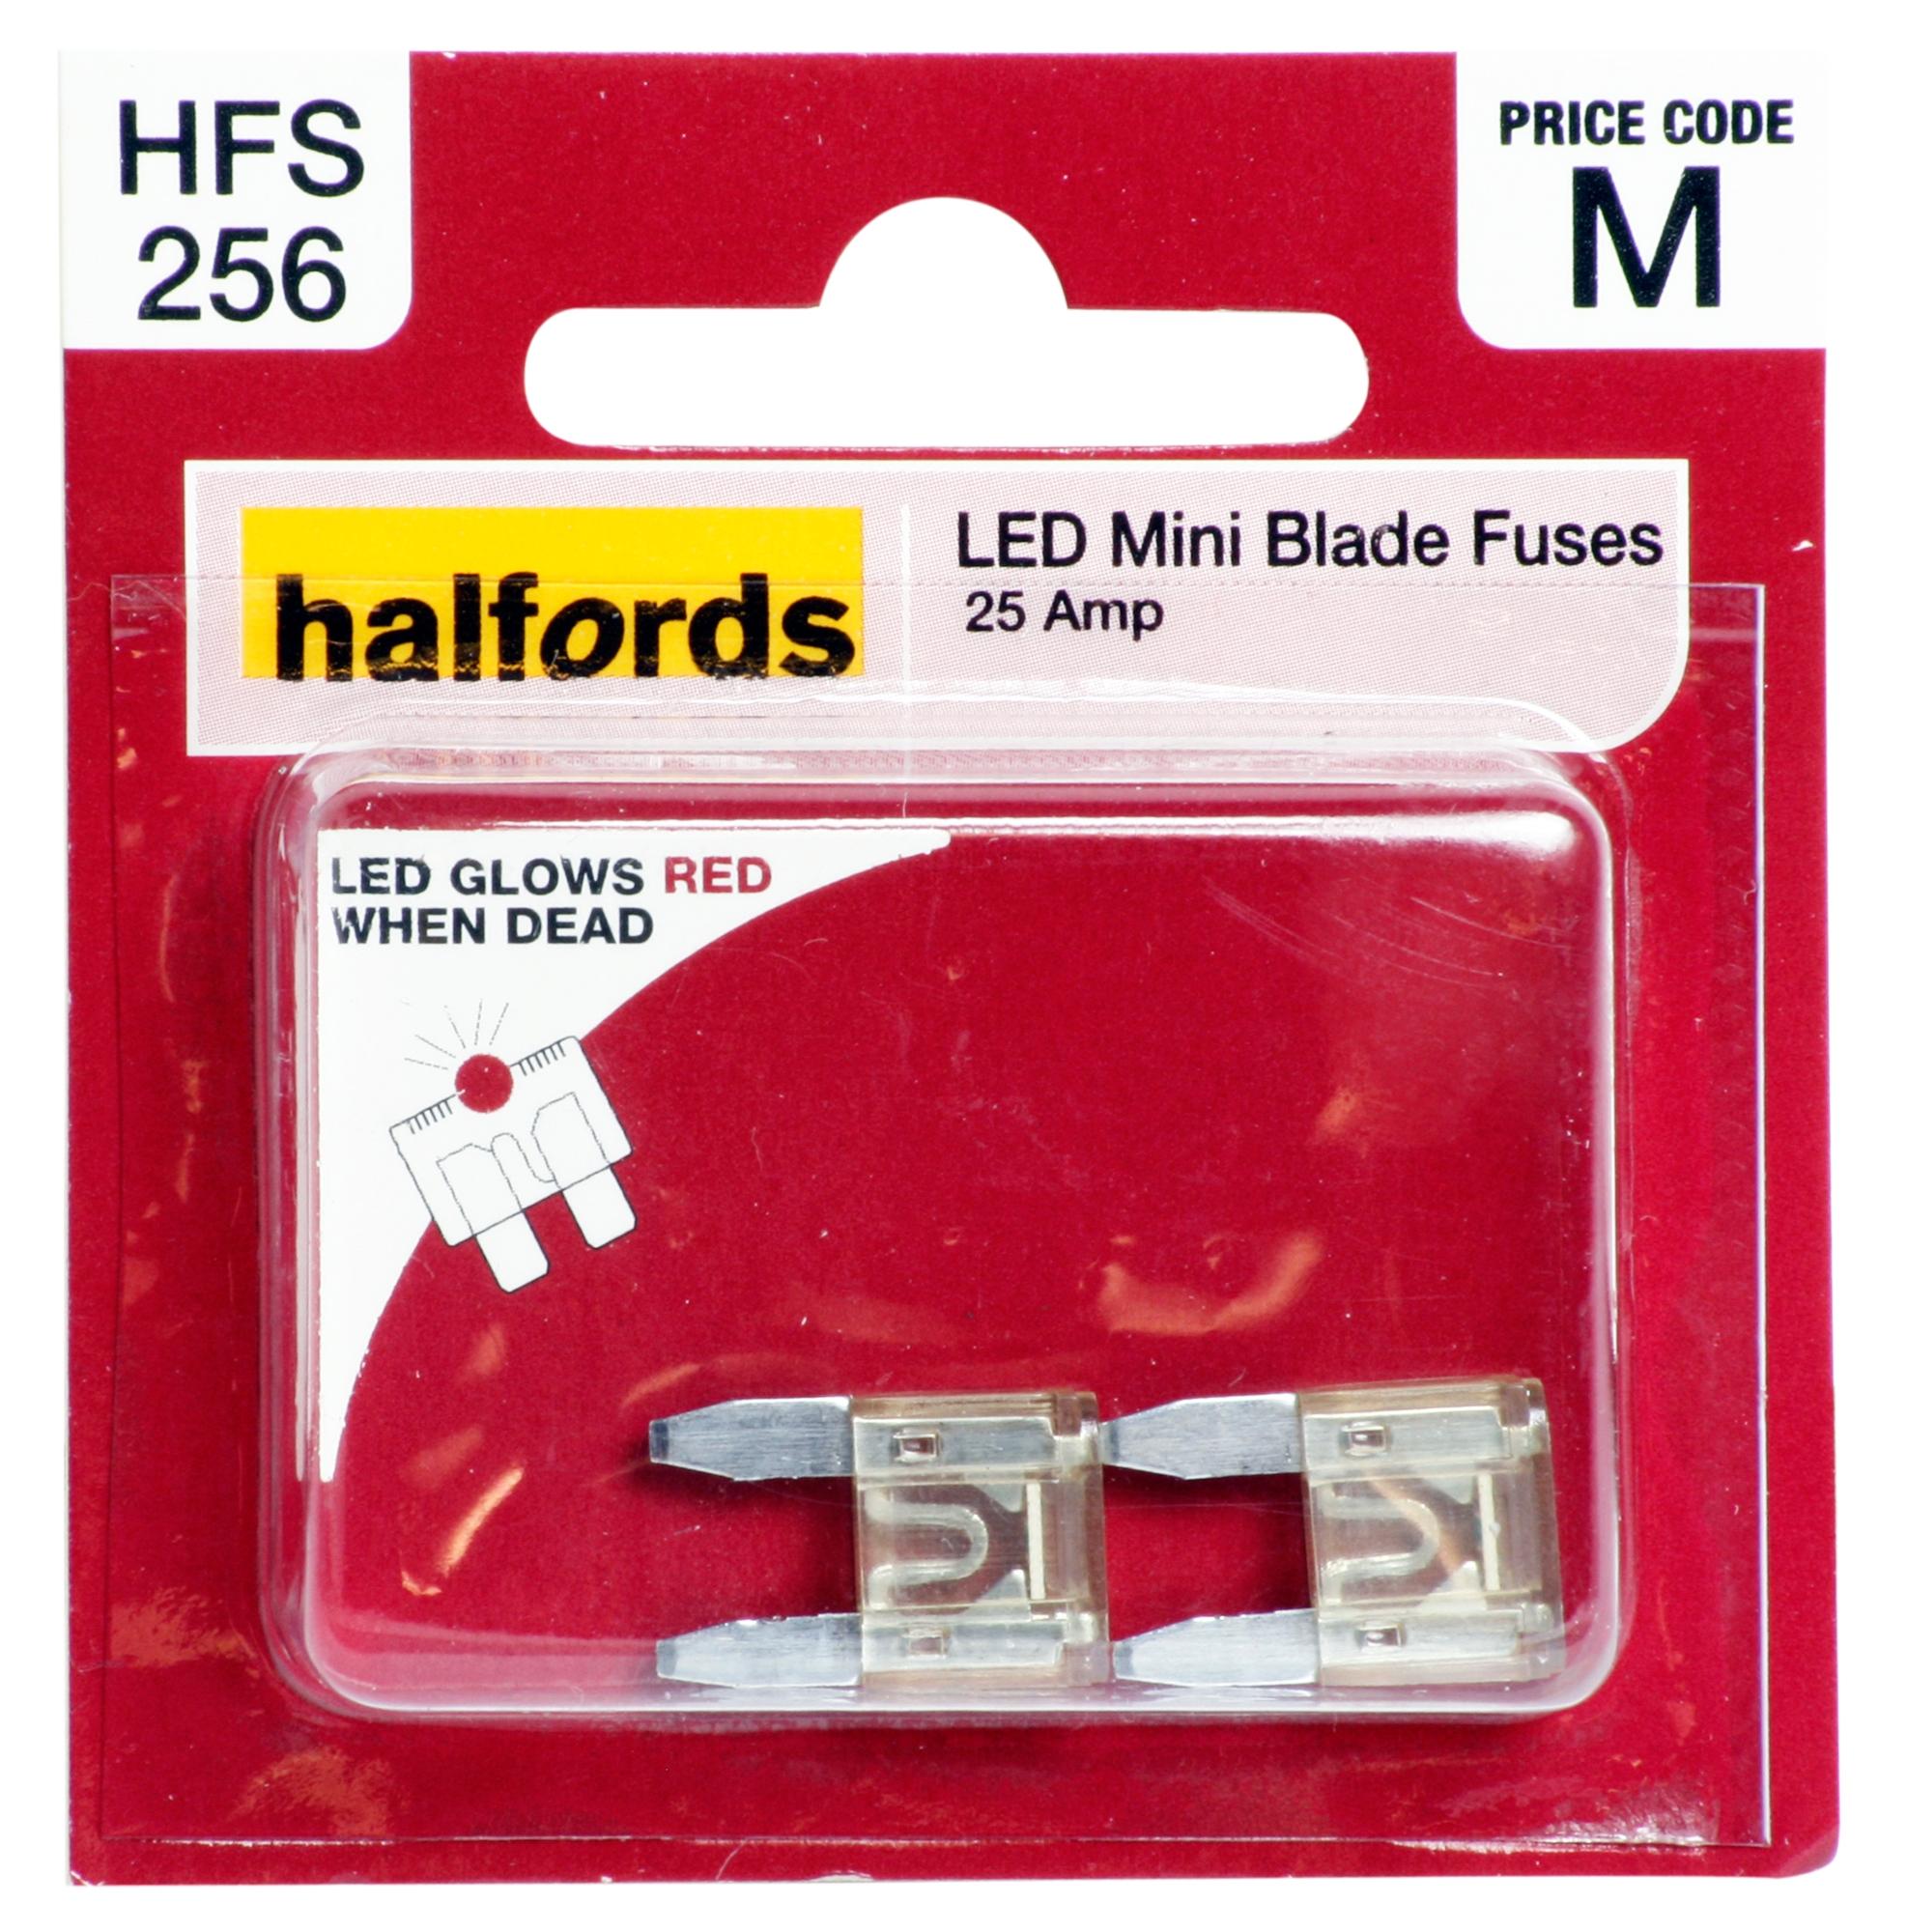 Halfords Led Mini Blade Fuses 25 Amp (Hfs256)